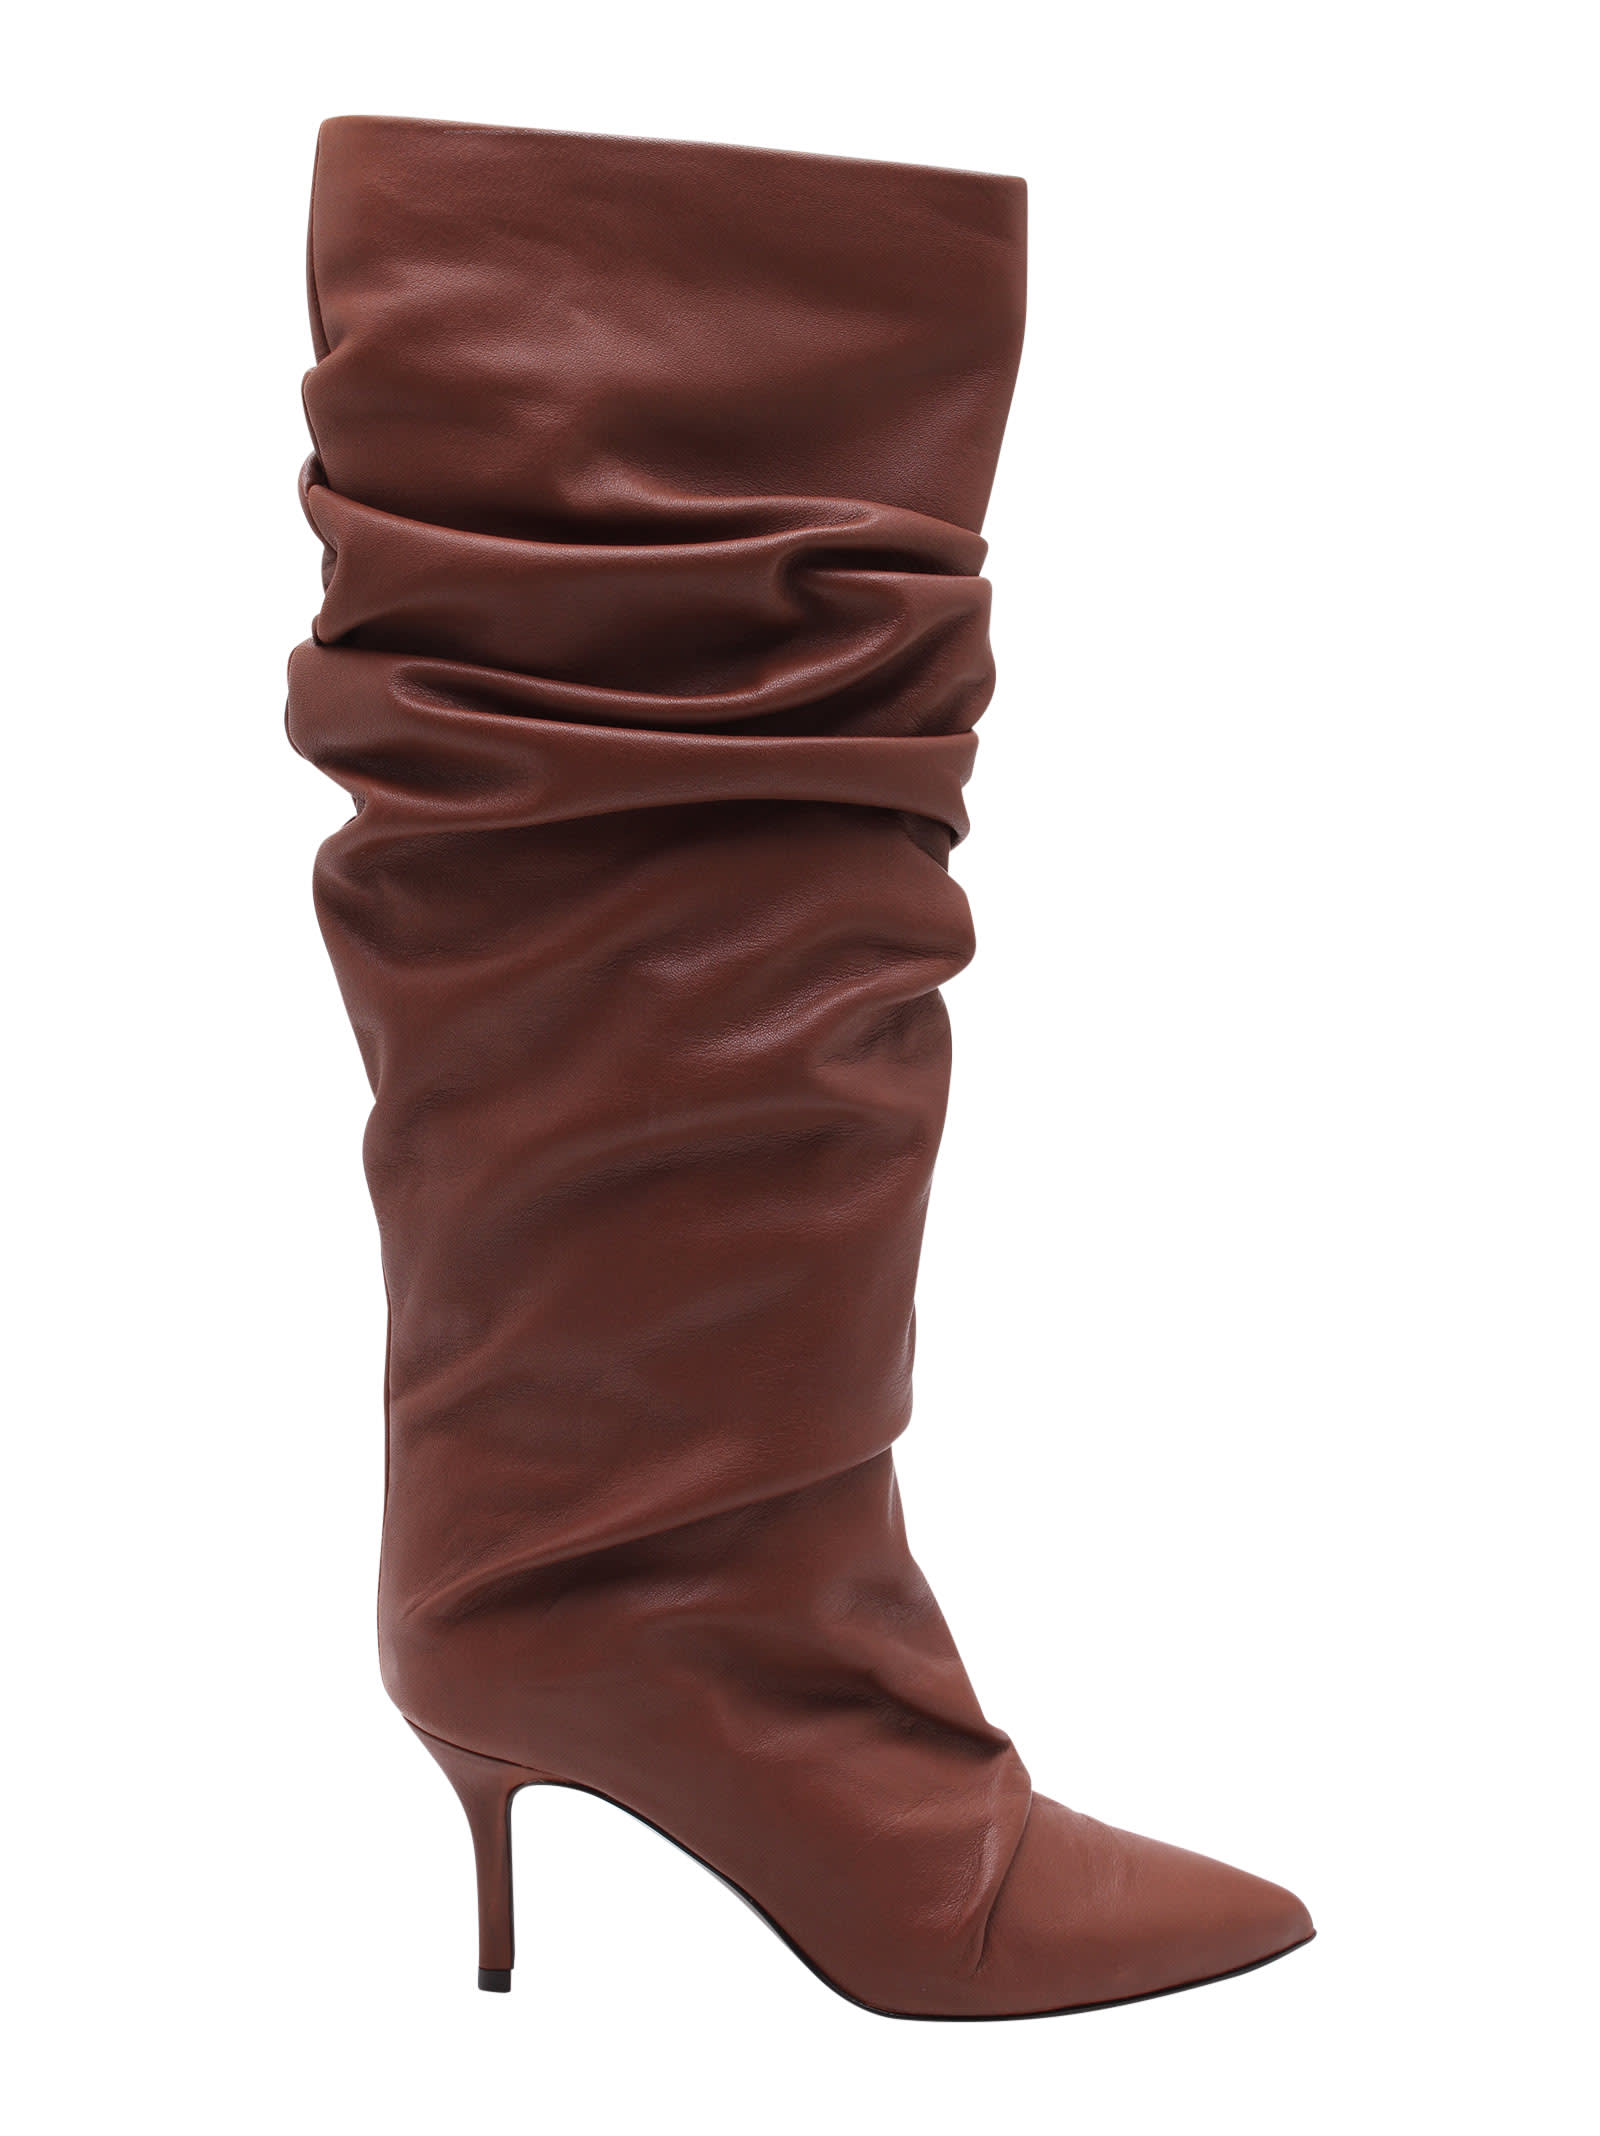 Islo chantal Leatherette Boots